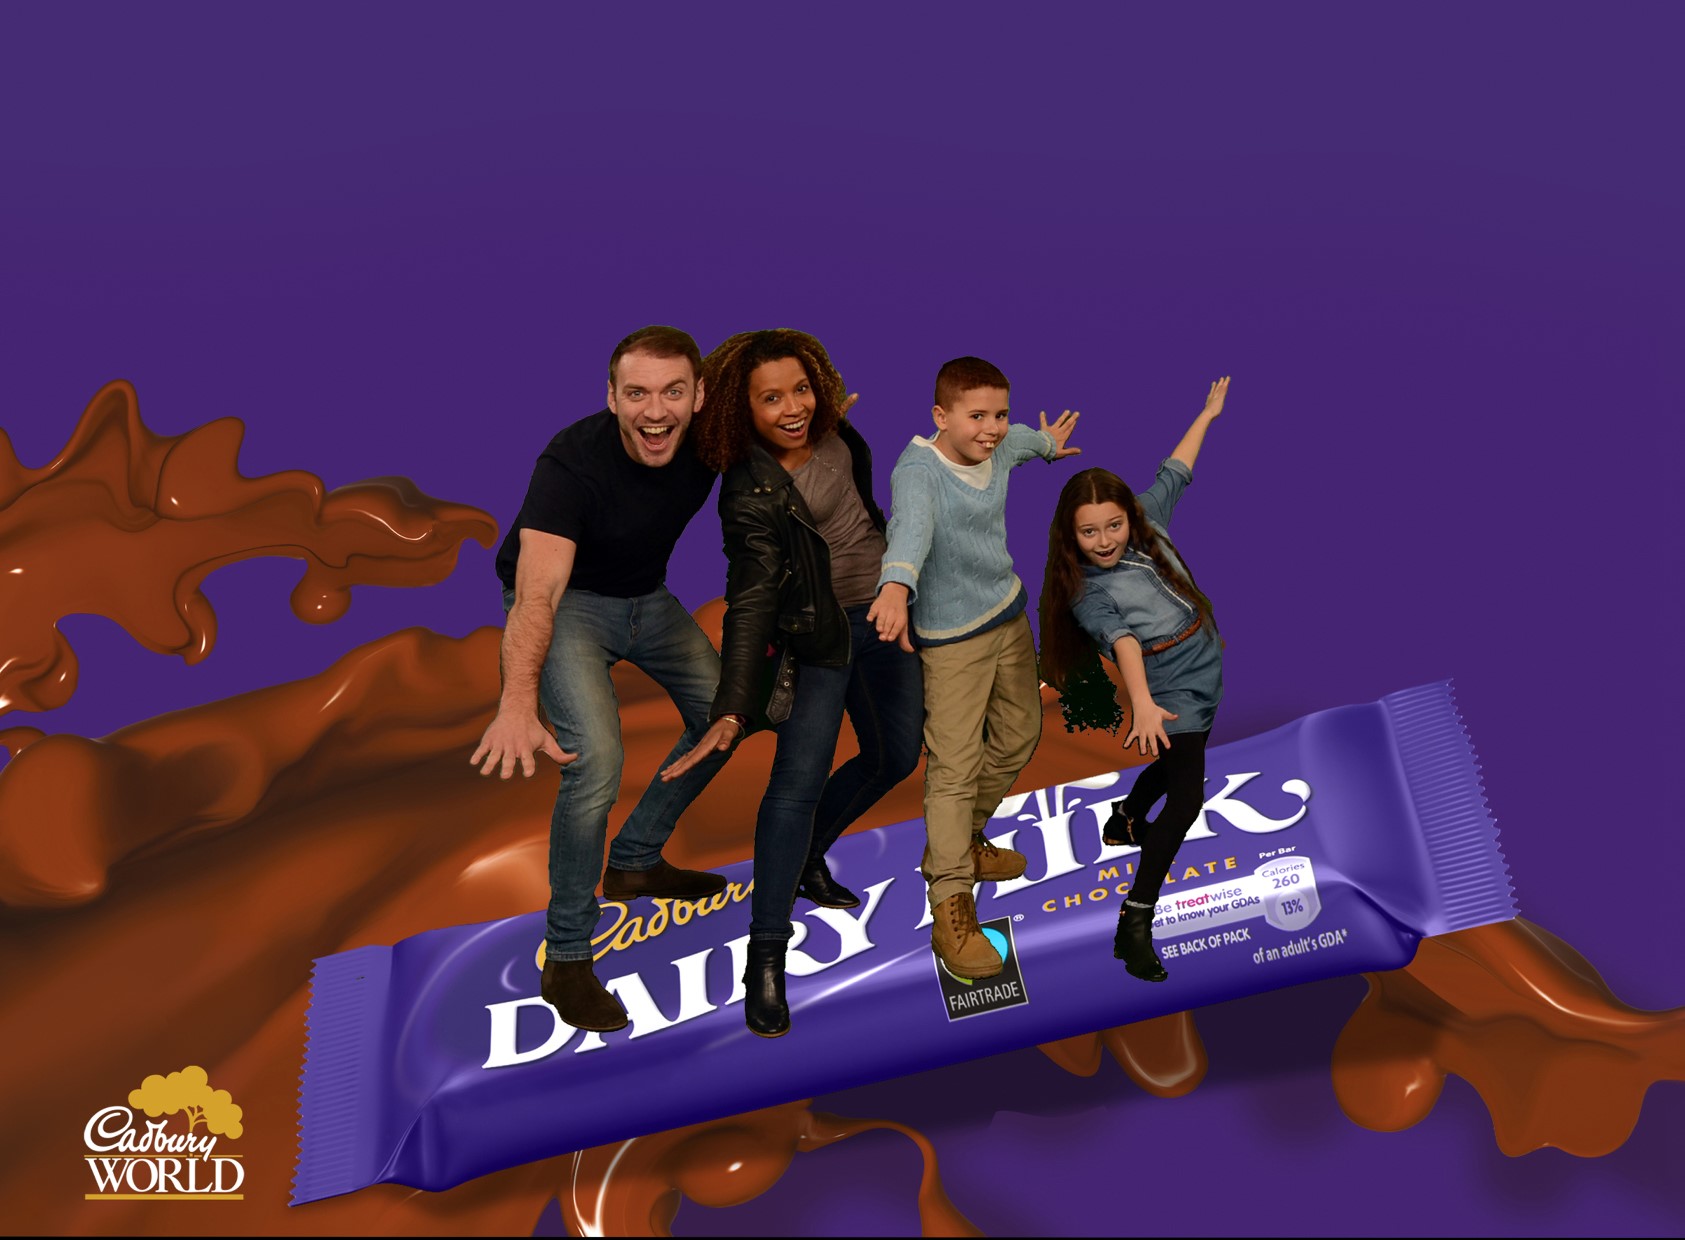 Family green screen standing on top a large Cadbury's chocolate bar at Cadbury World